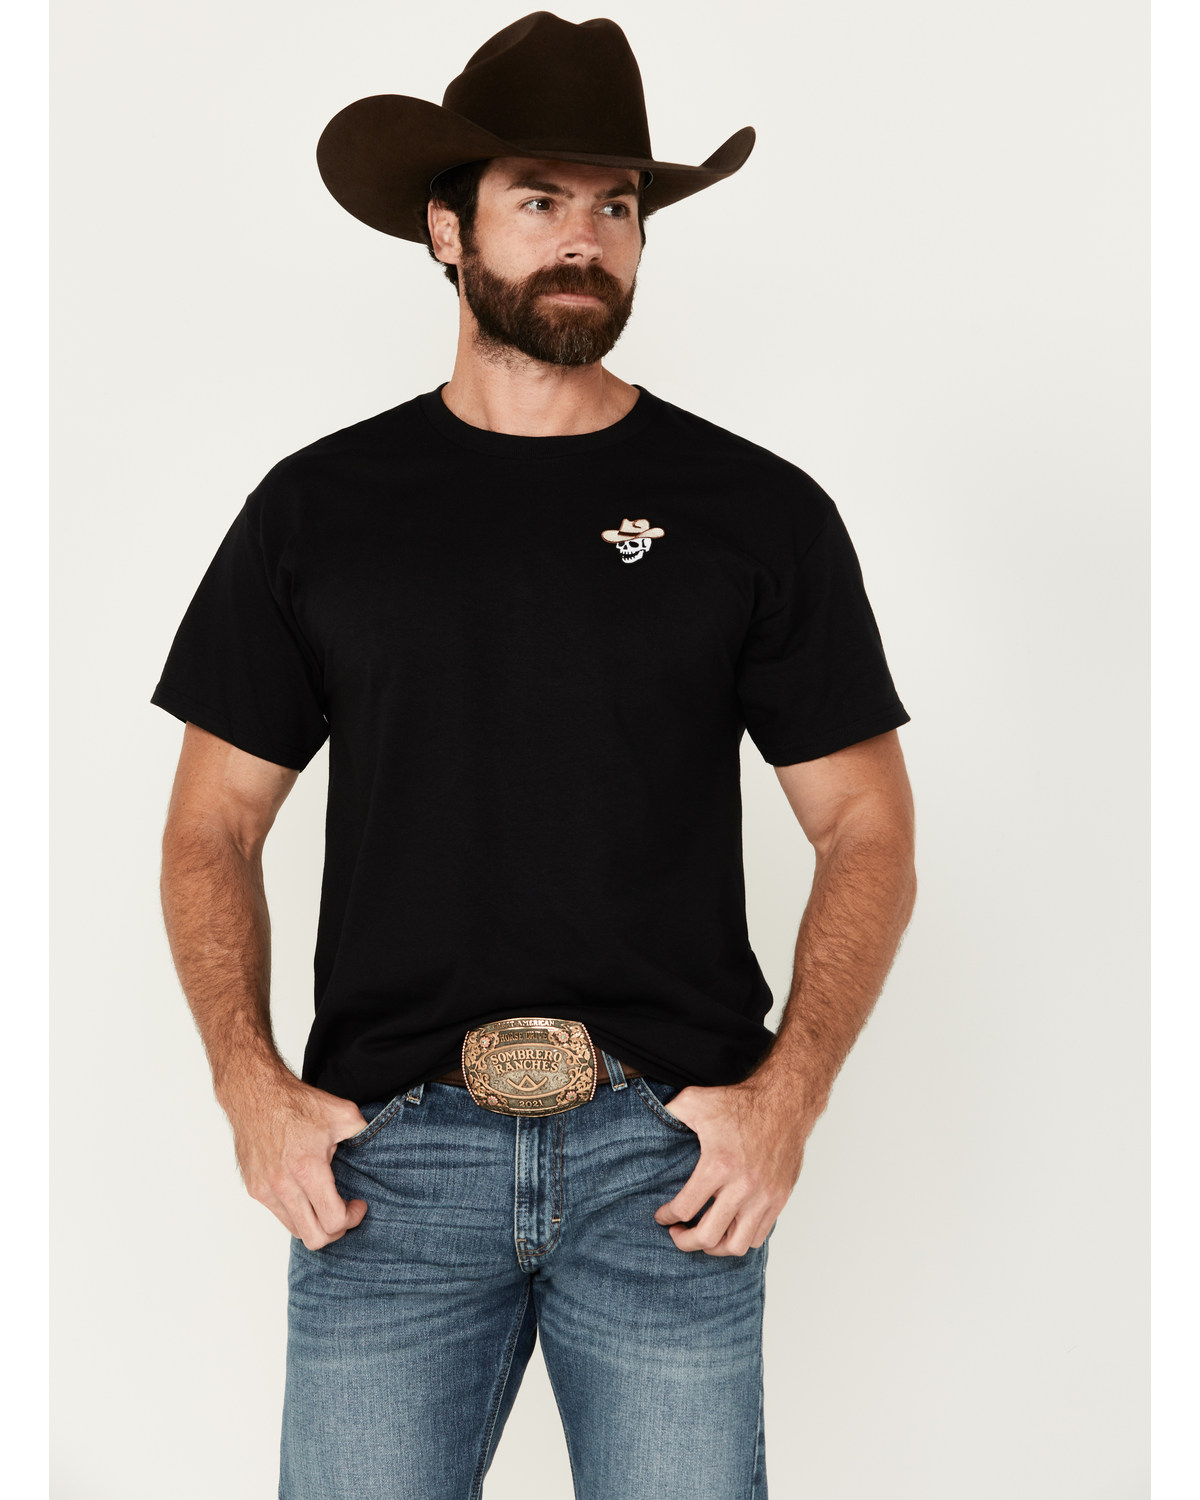 Riot Society Men's Dead Cowboy Short Sleeve Graphic T-Shirt